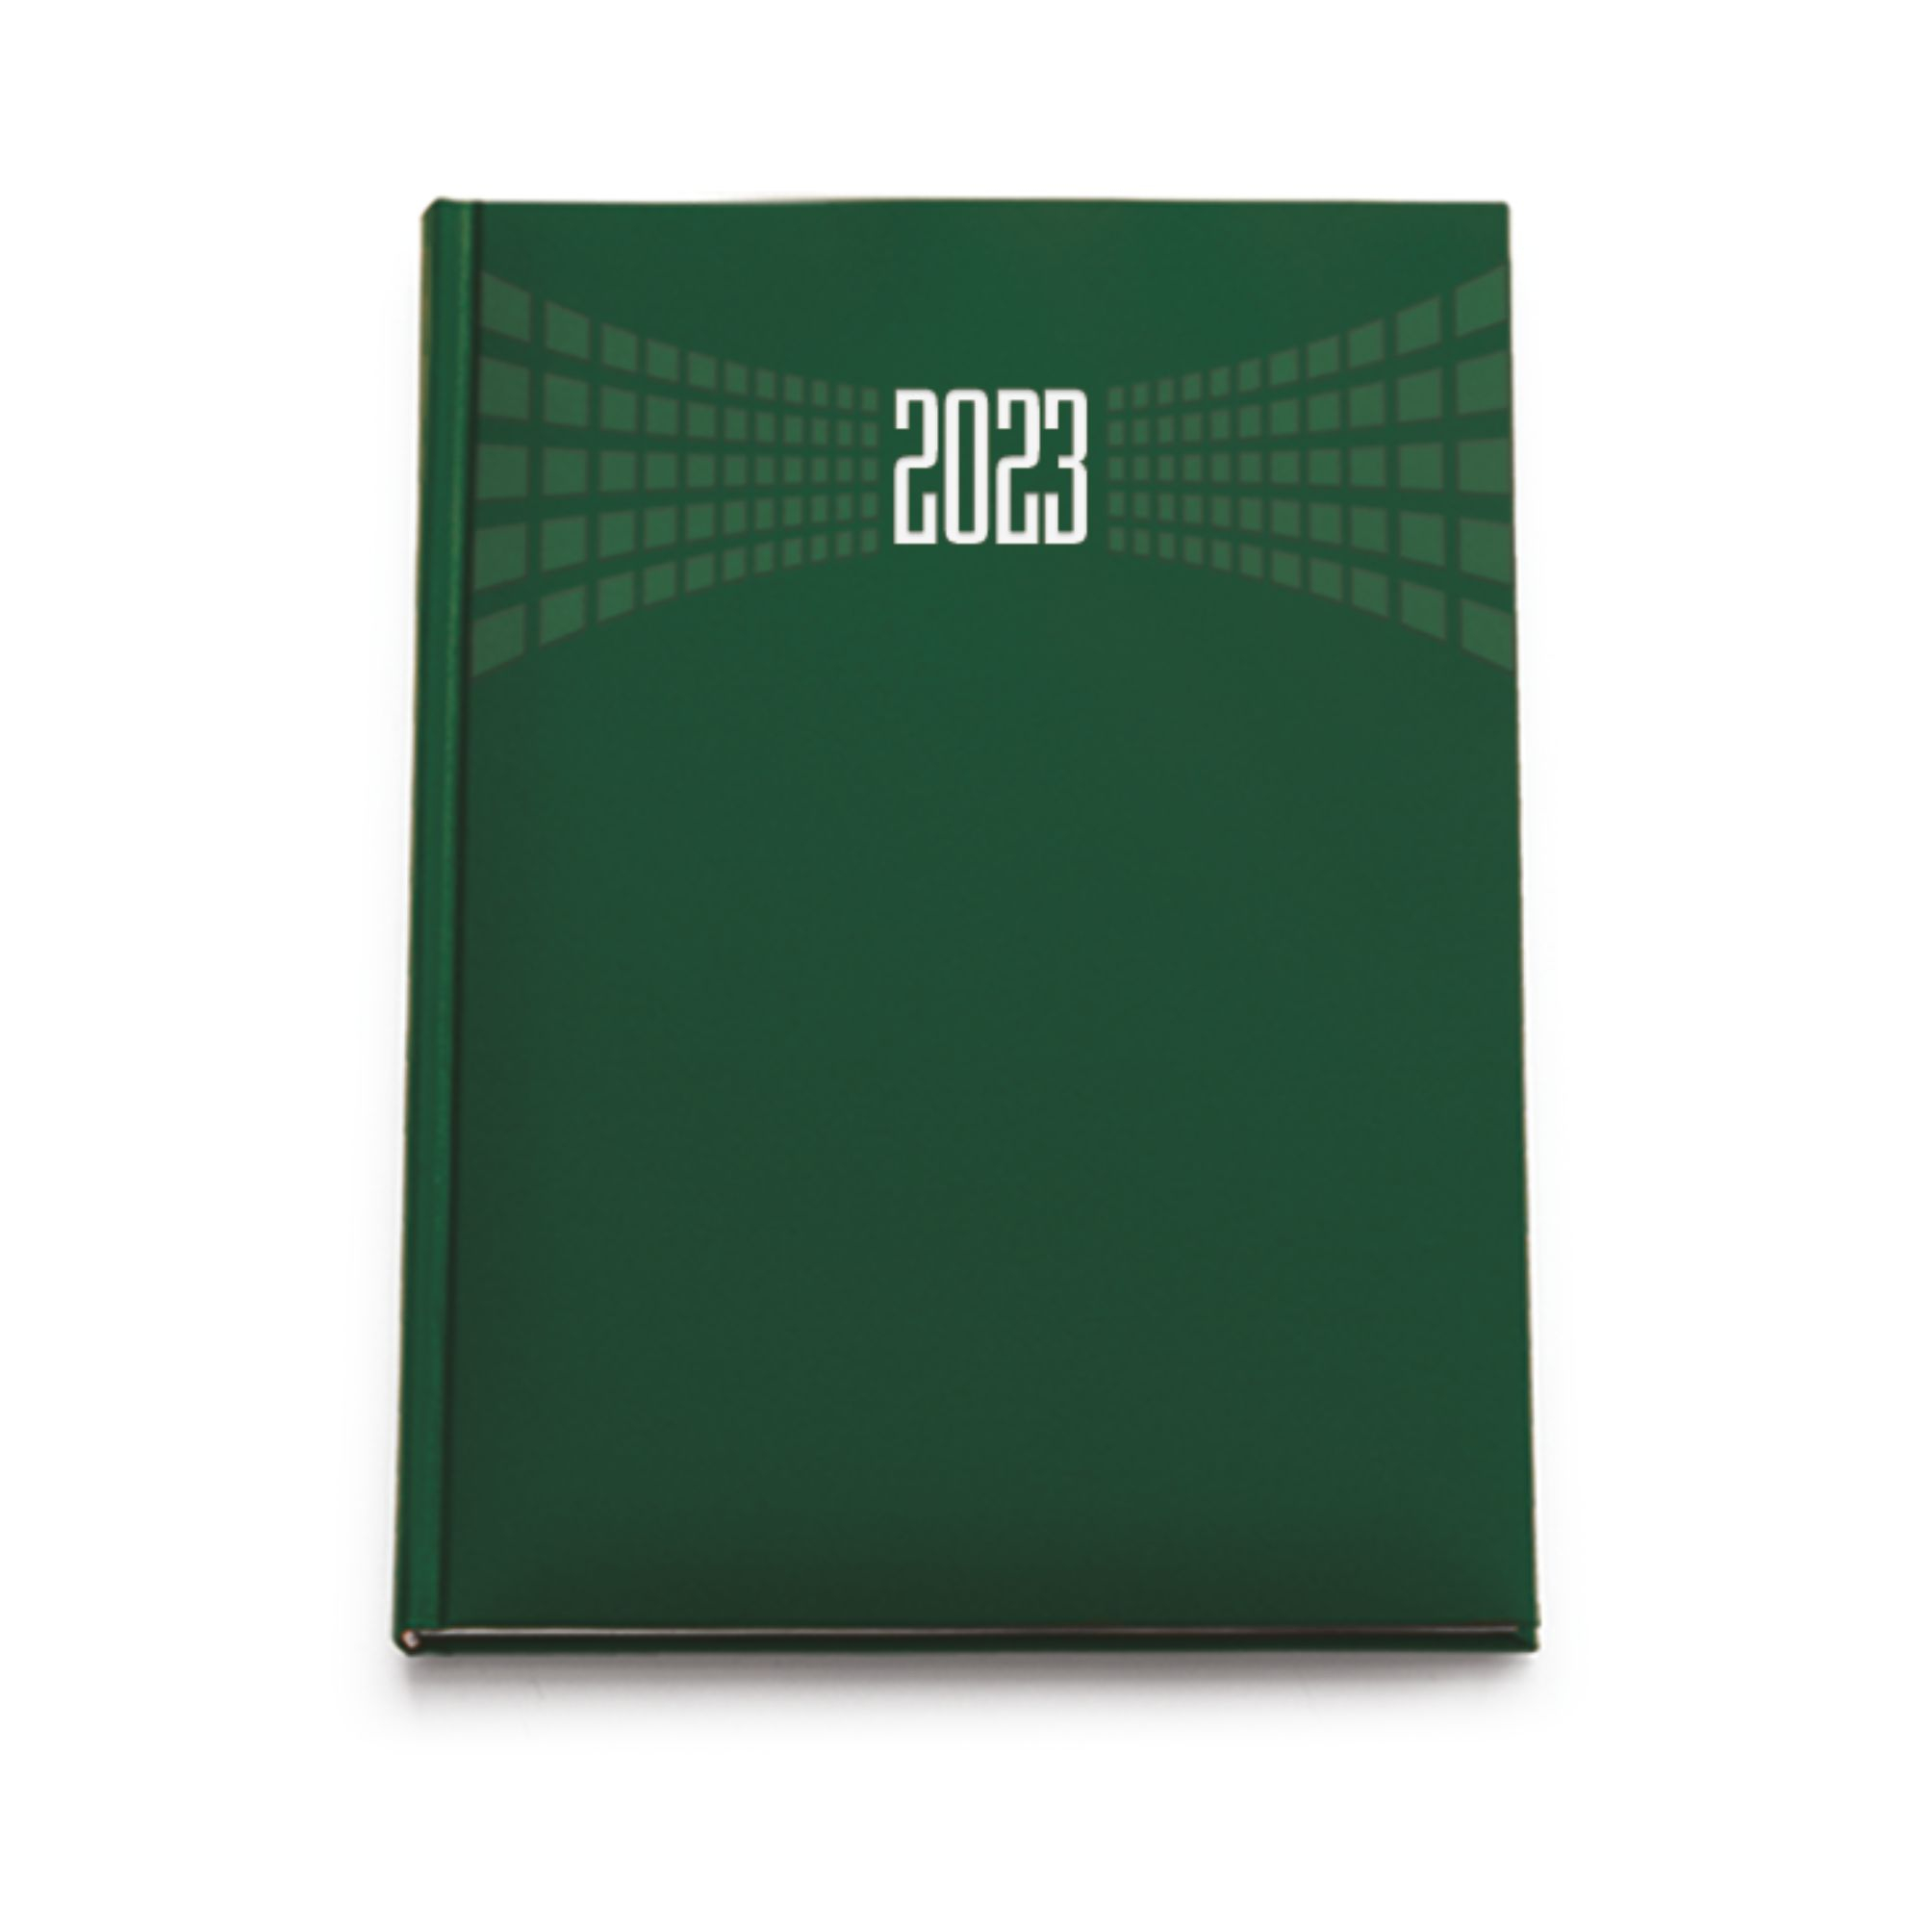 0358-agenda-giornaliera-matra-cm-17x24-verde.jpg